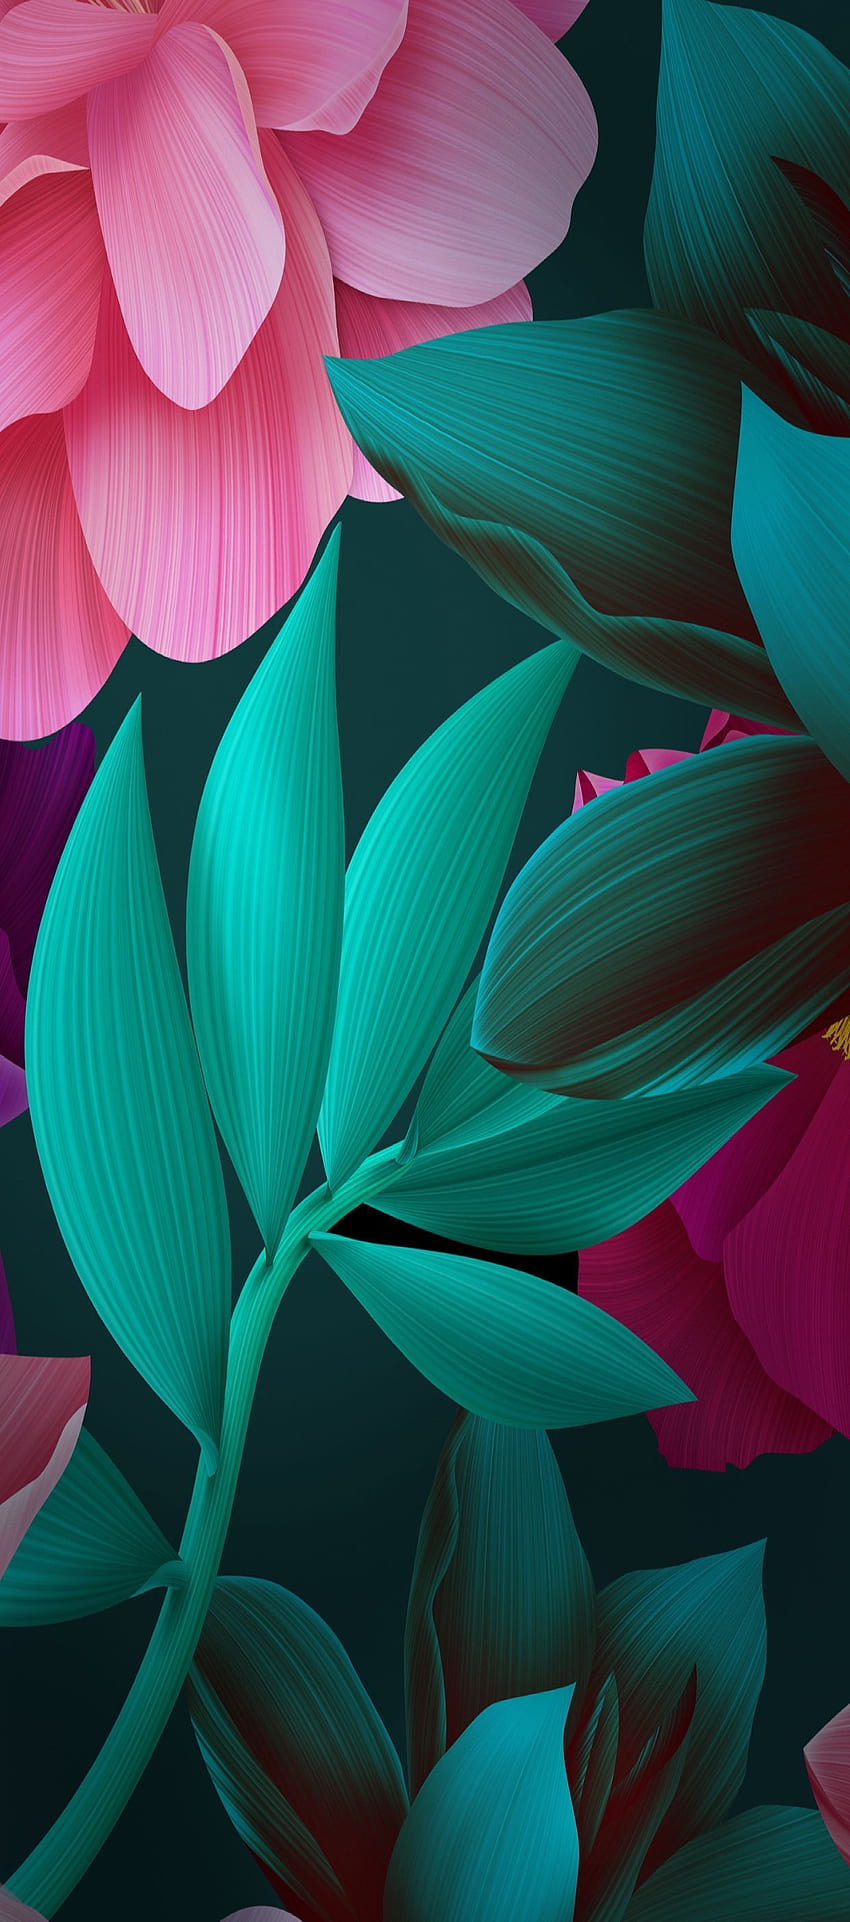 iOS 11, iPhone X, hijau, hitam, merah muda, bunga, tumbuhan, sederhana, abstrak, apel,, iphone 8, bersih, cantik,. Duvar kağıtları, Sanatsal baskı, Soyut resimler, Pink Black Minimalis wallpaper ponsel HD